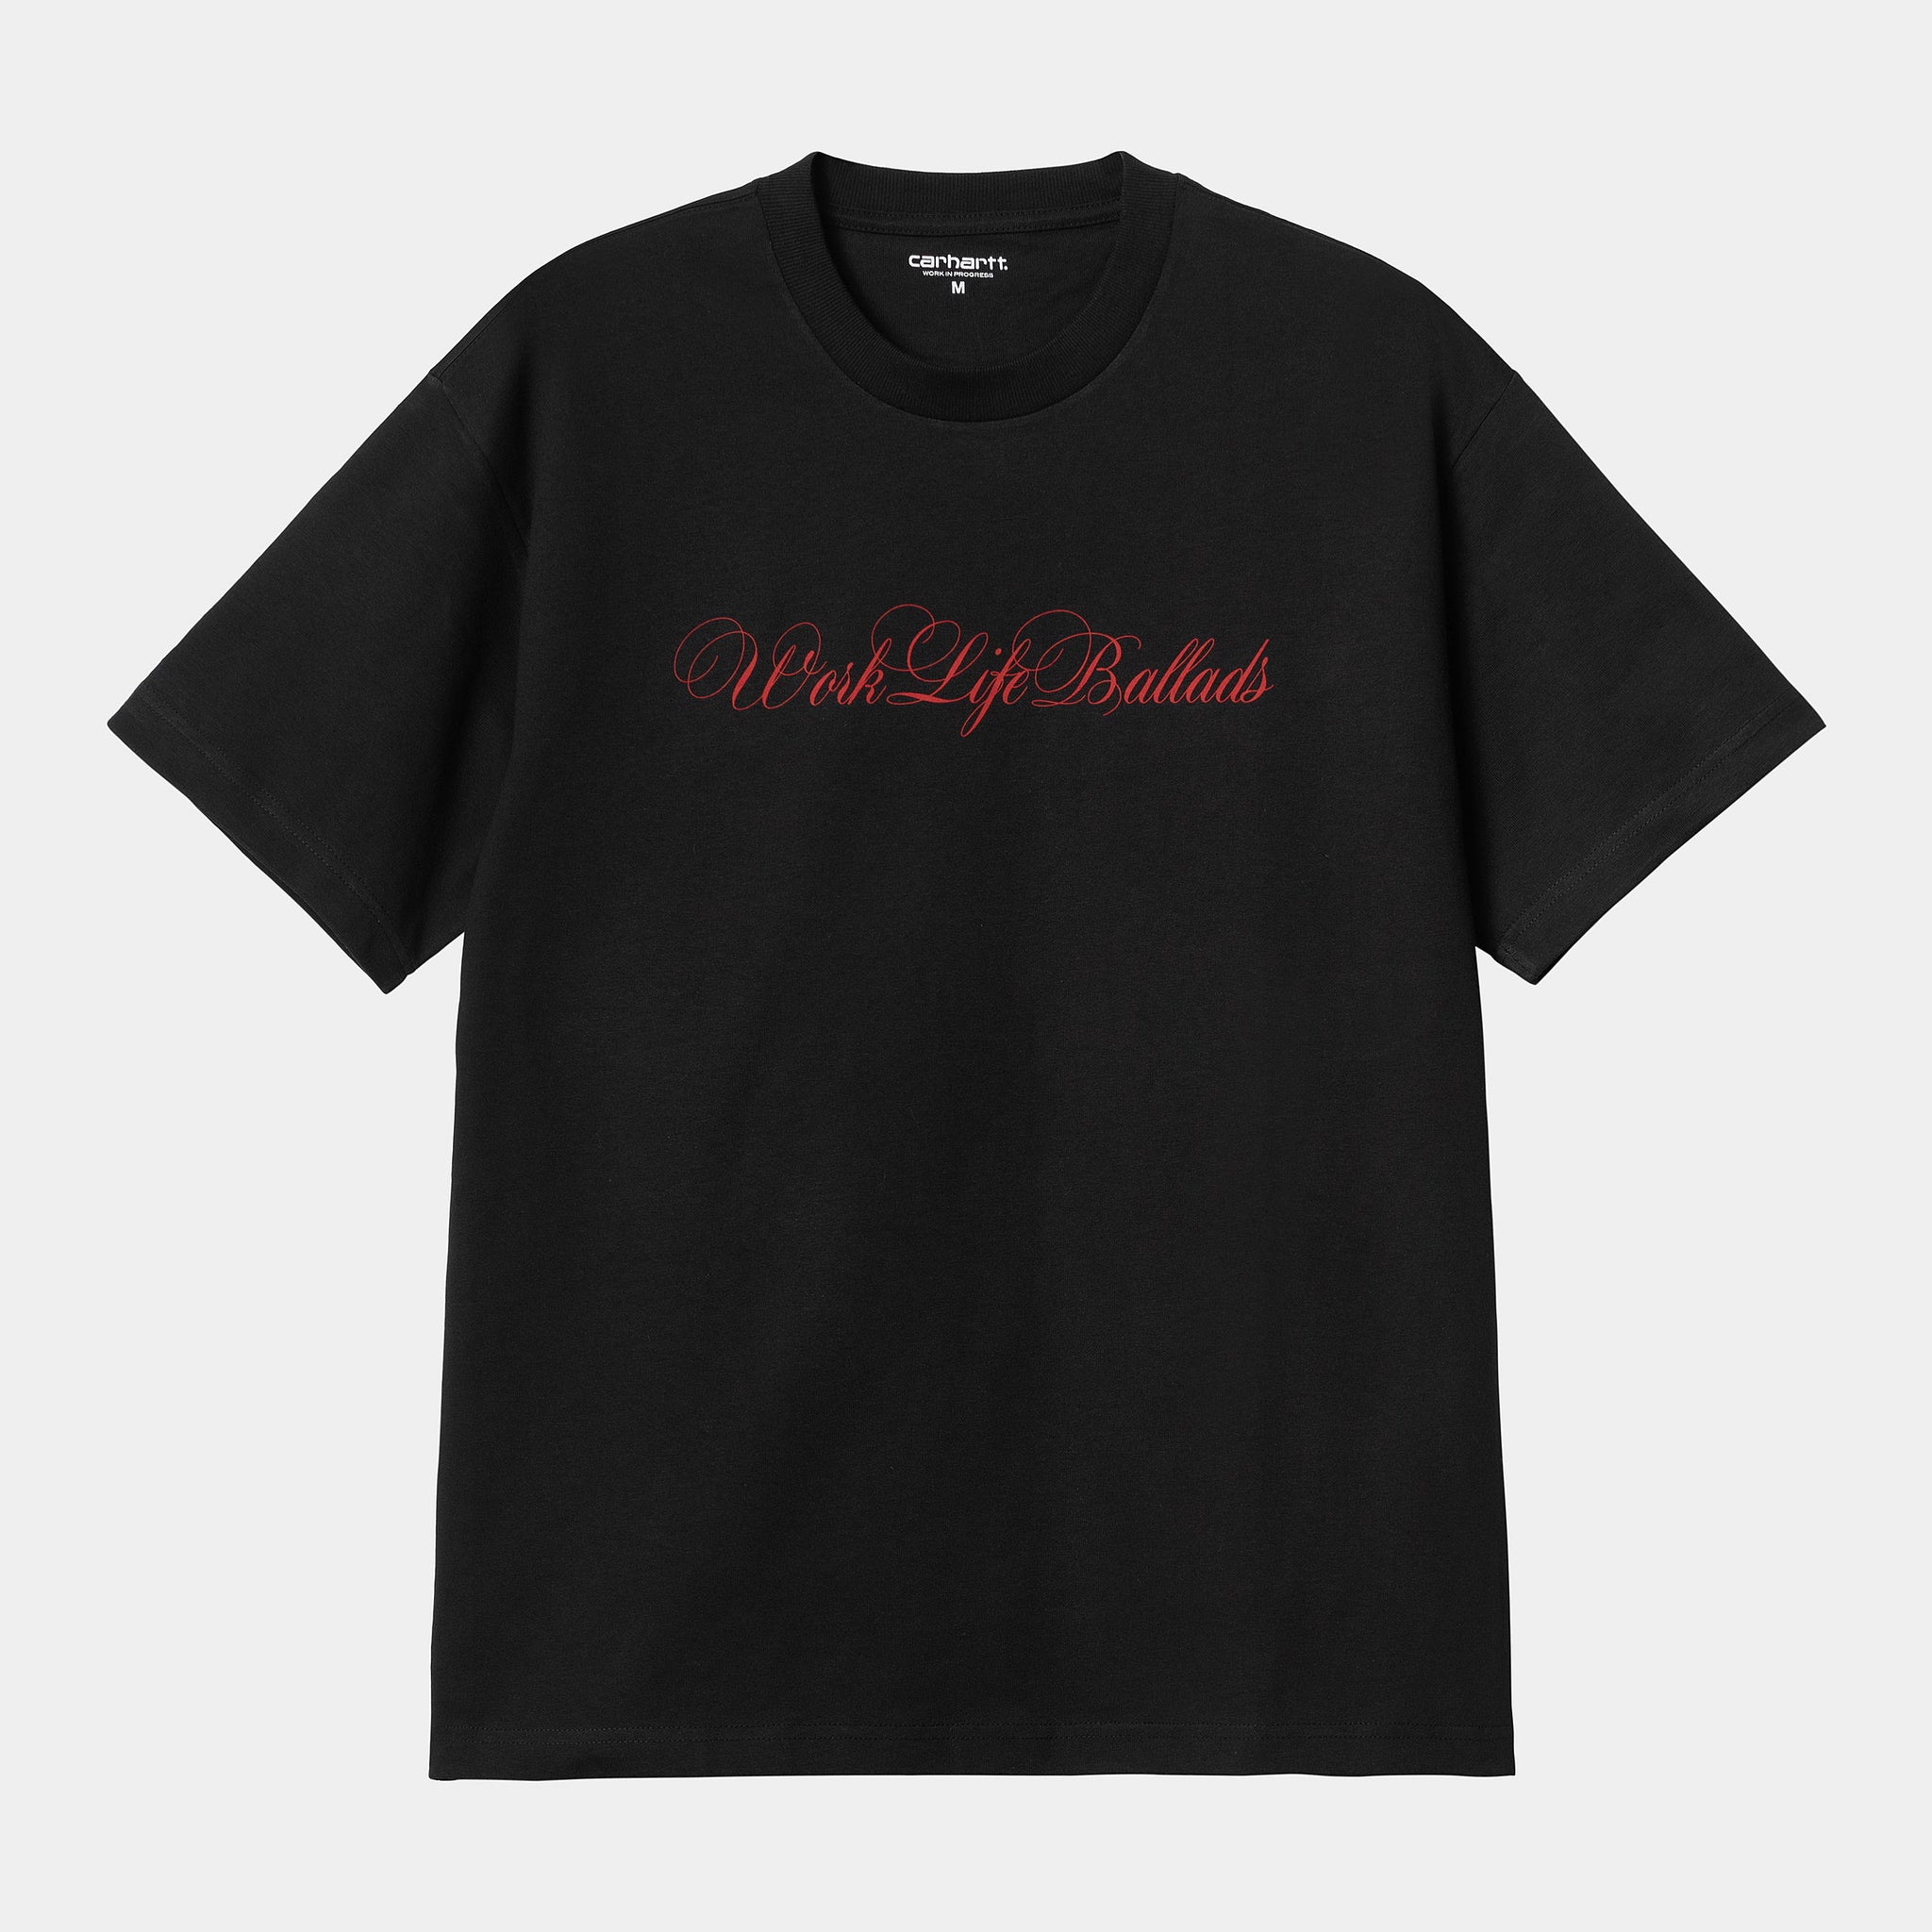 Carhartt WIP S/S Work Life Ballads T-Shirt (Black/red)